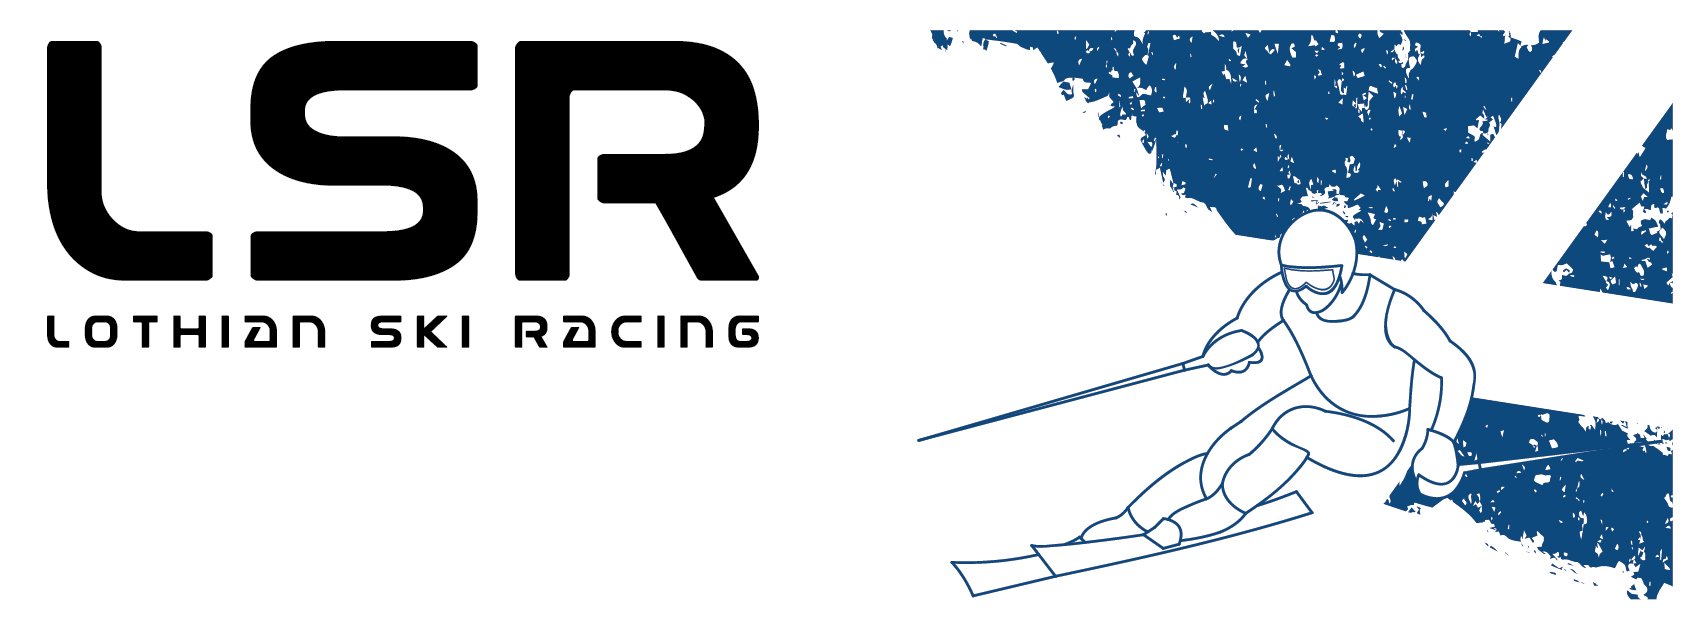 Lothian Ski Racing logo